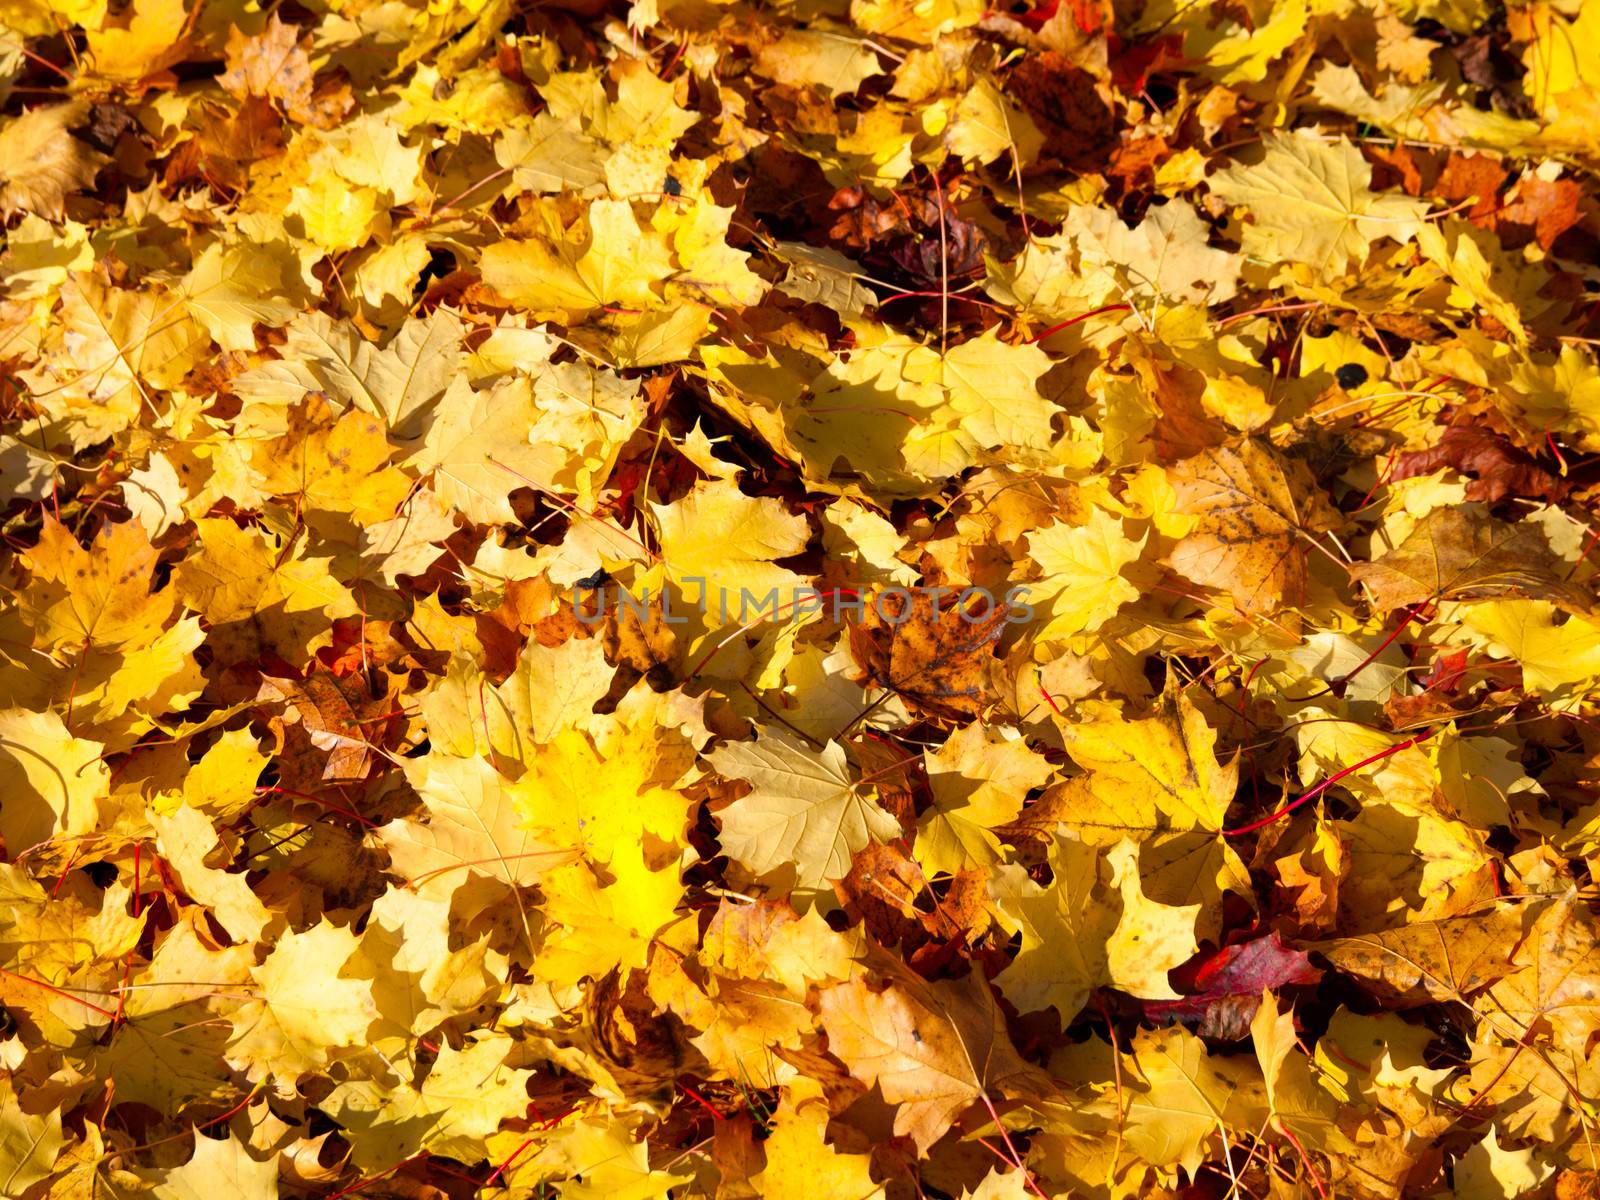 Watercolor Fall Leaves